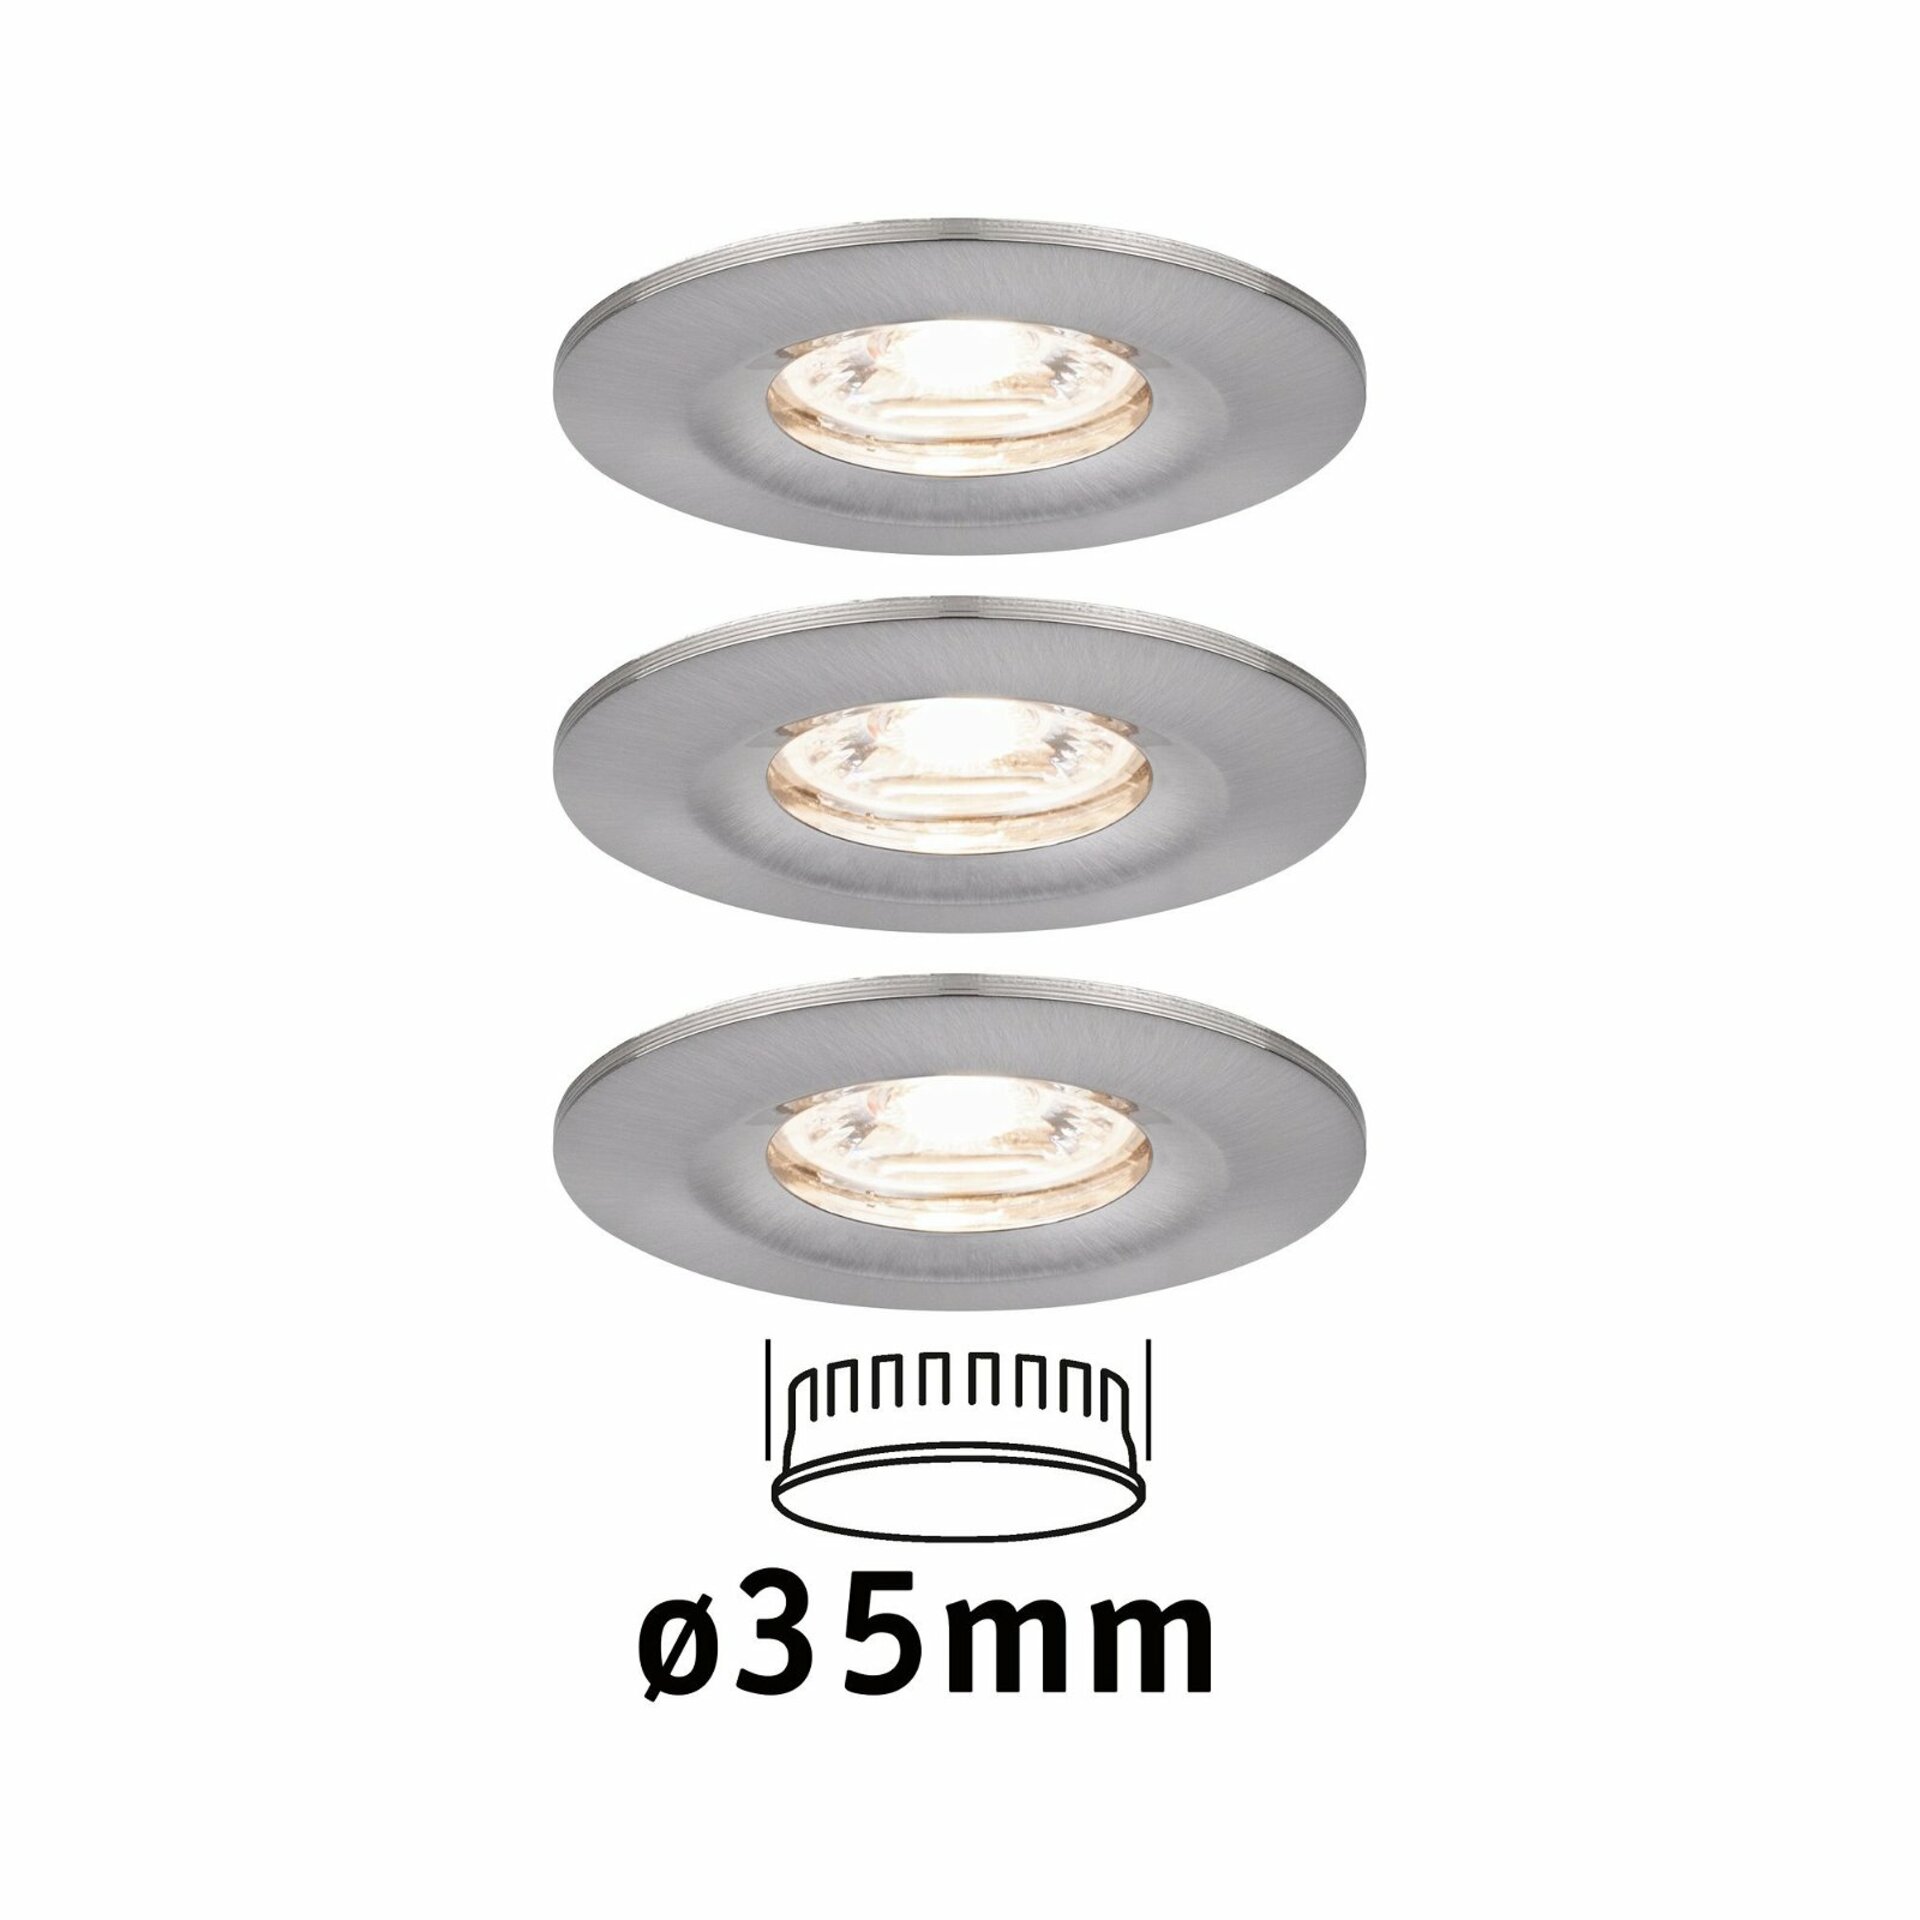 PAULMANN LED vestavné svítidlo Nova mini nevýklopné IP44 3x4W 2700K kov kartáčovaný 230V 943.01